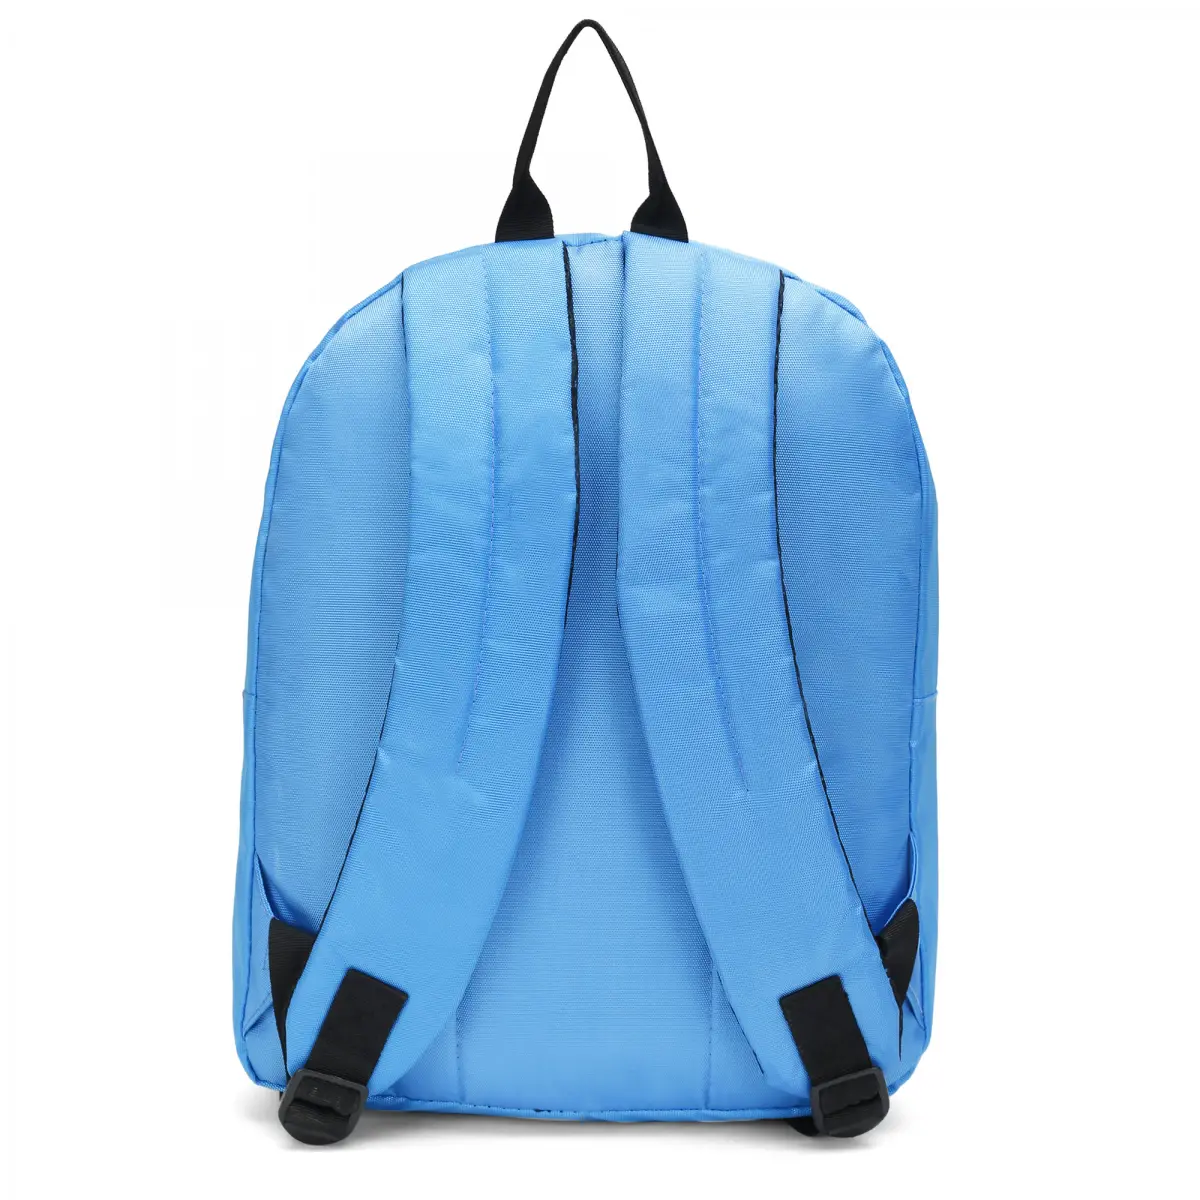 Hamleys School Bag Pack for Kids, 14Inches, Blue, 12Y+